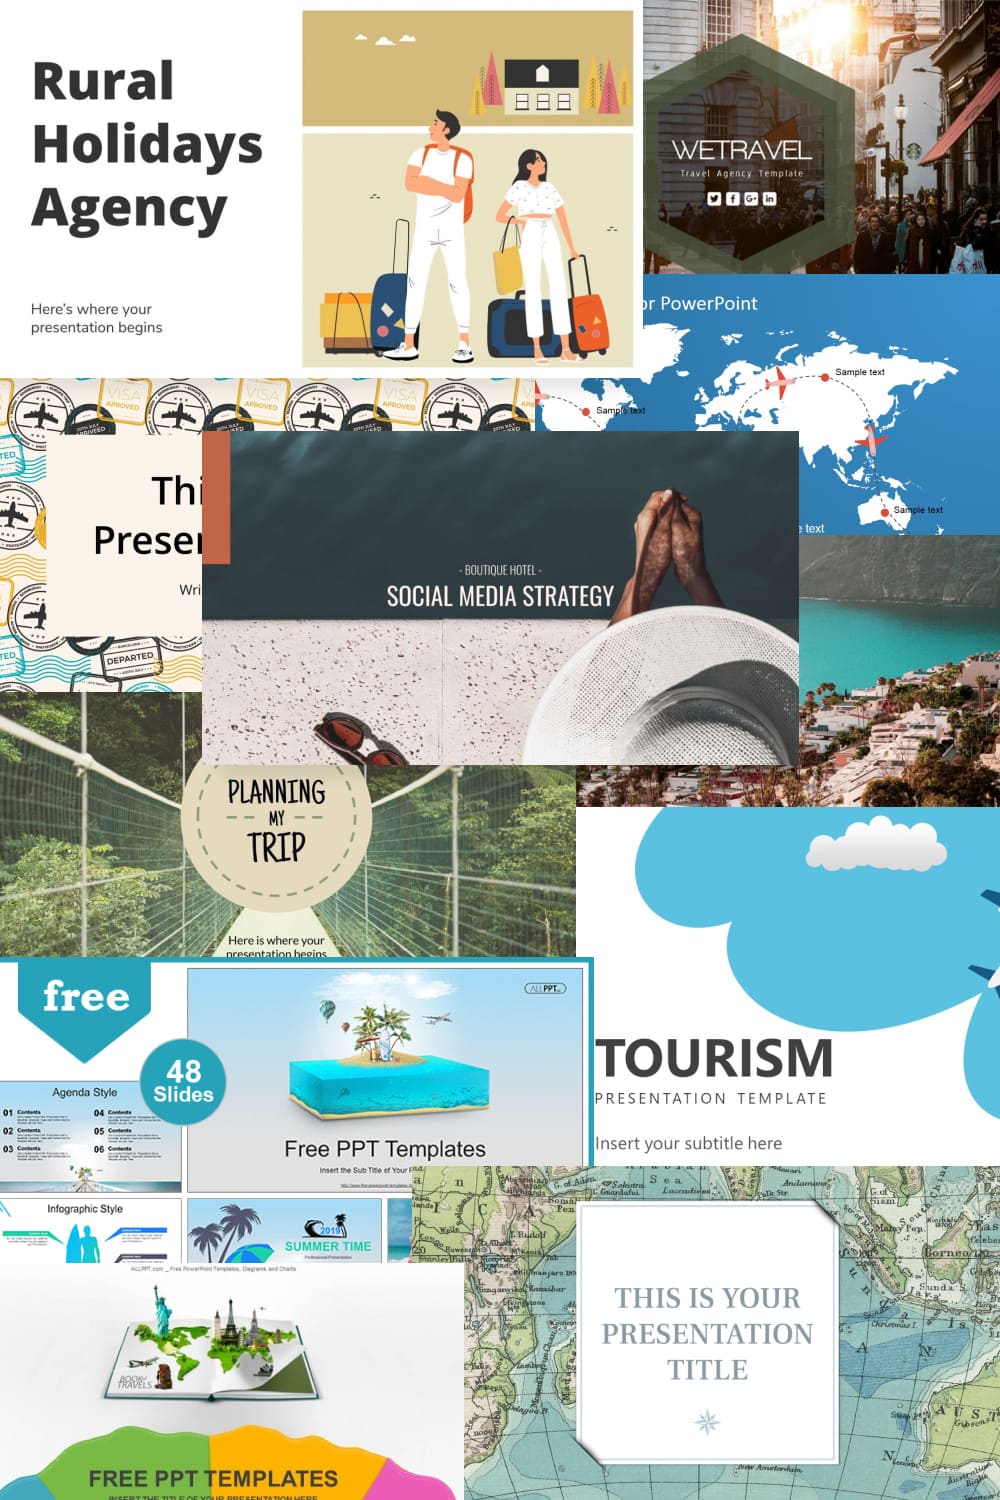 Travel Powerpoint Templates Pinterest.